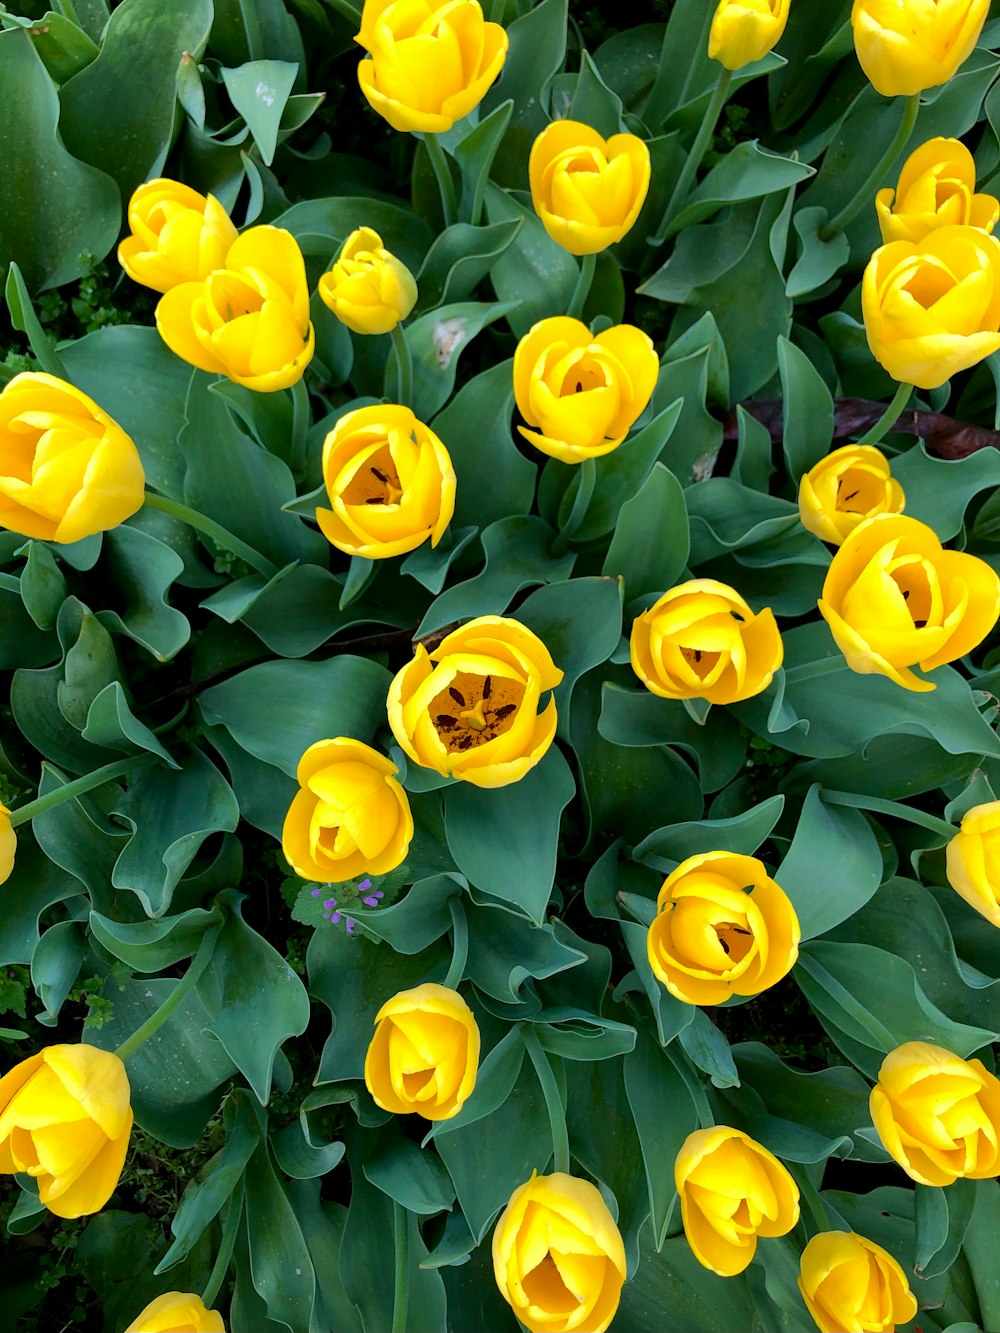 a bunch of yellow tulips growing in a garden